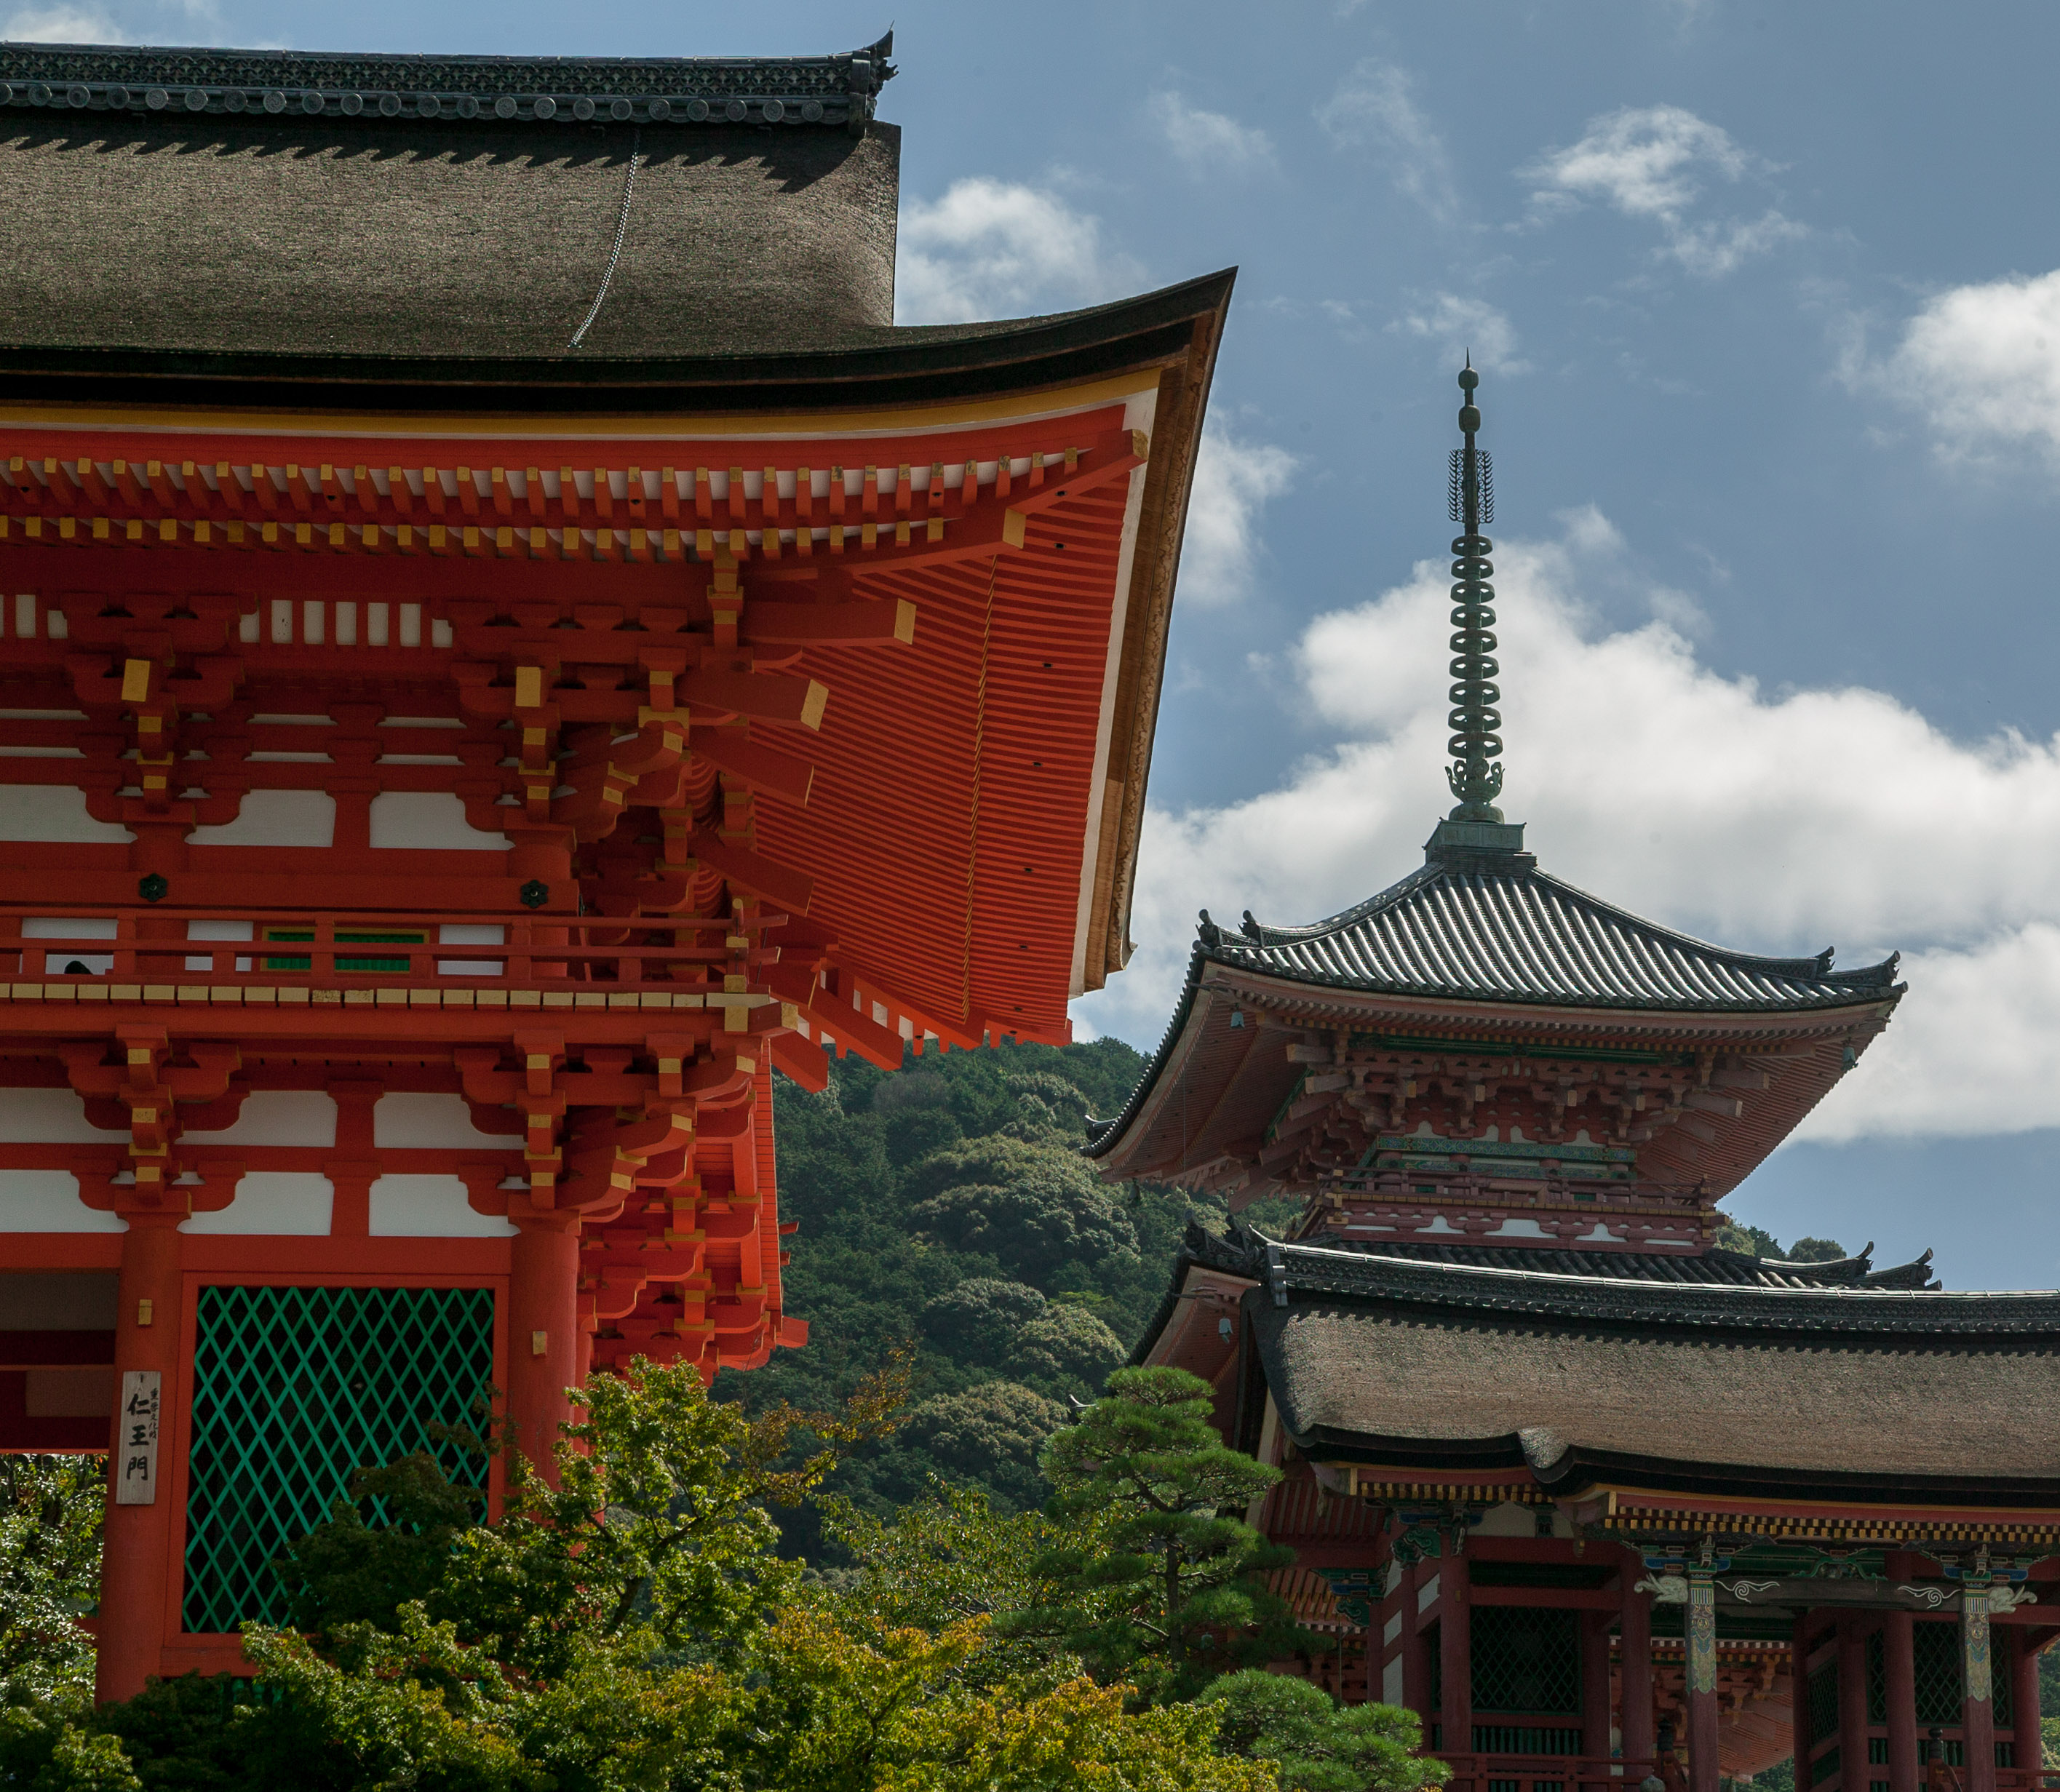 Kiyomizu Temple ("Pure Water Temple")